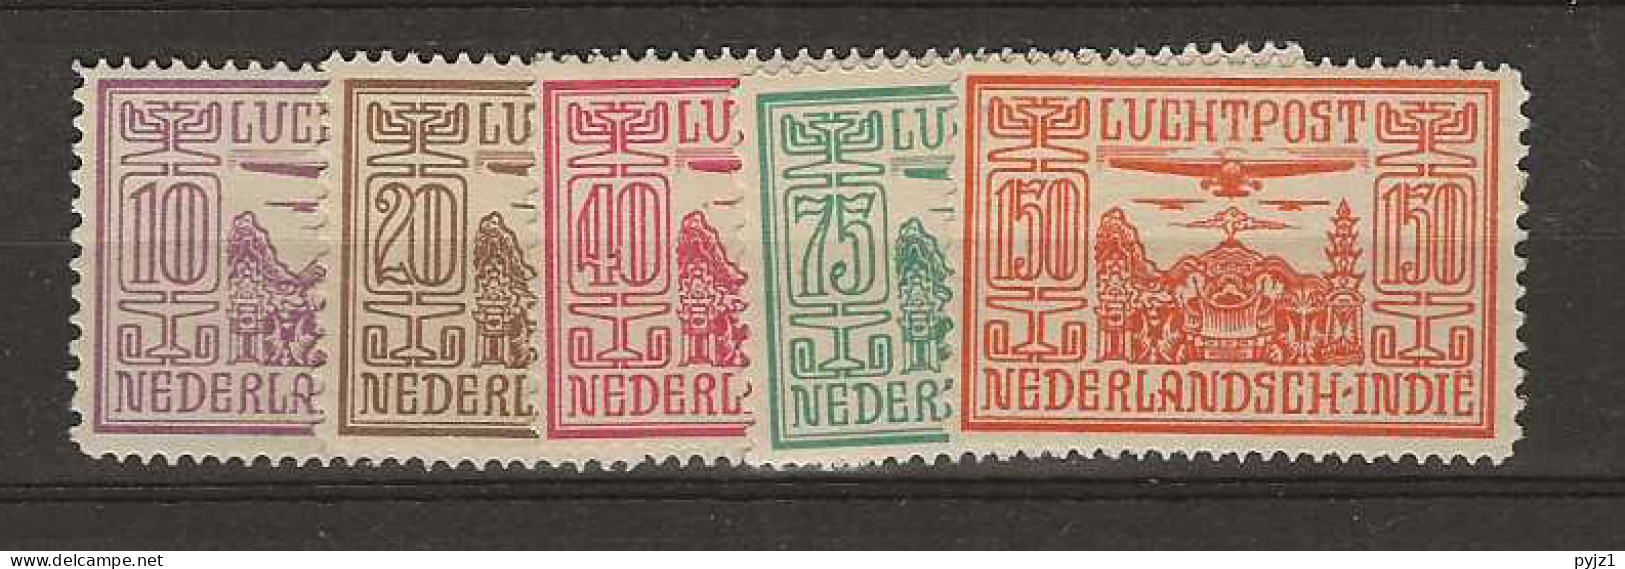 1928 MH Nederlands Indië Airmail NVPH LP 6-10 - Netherlands Indies